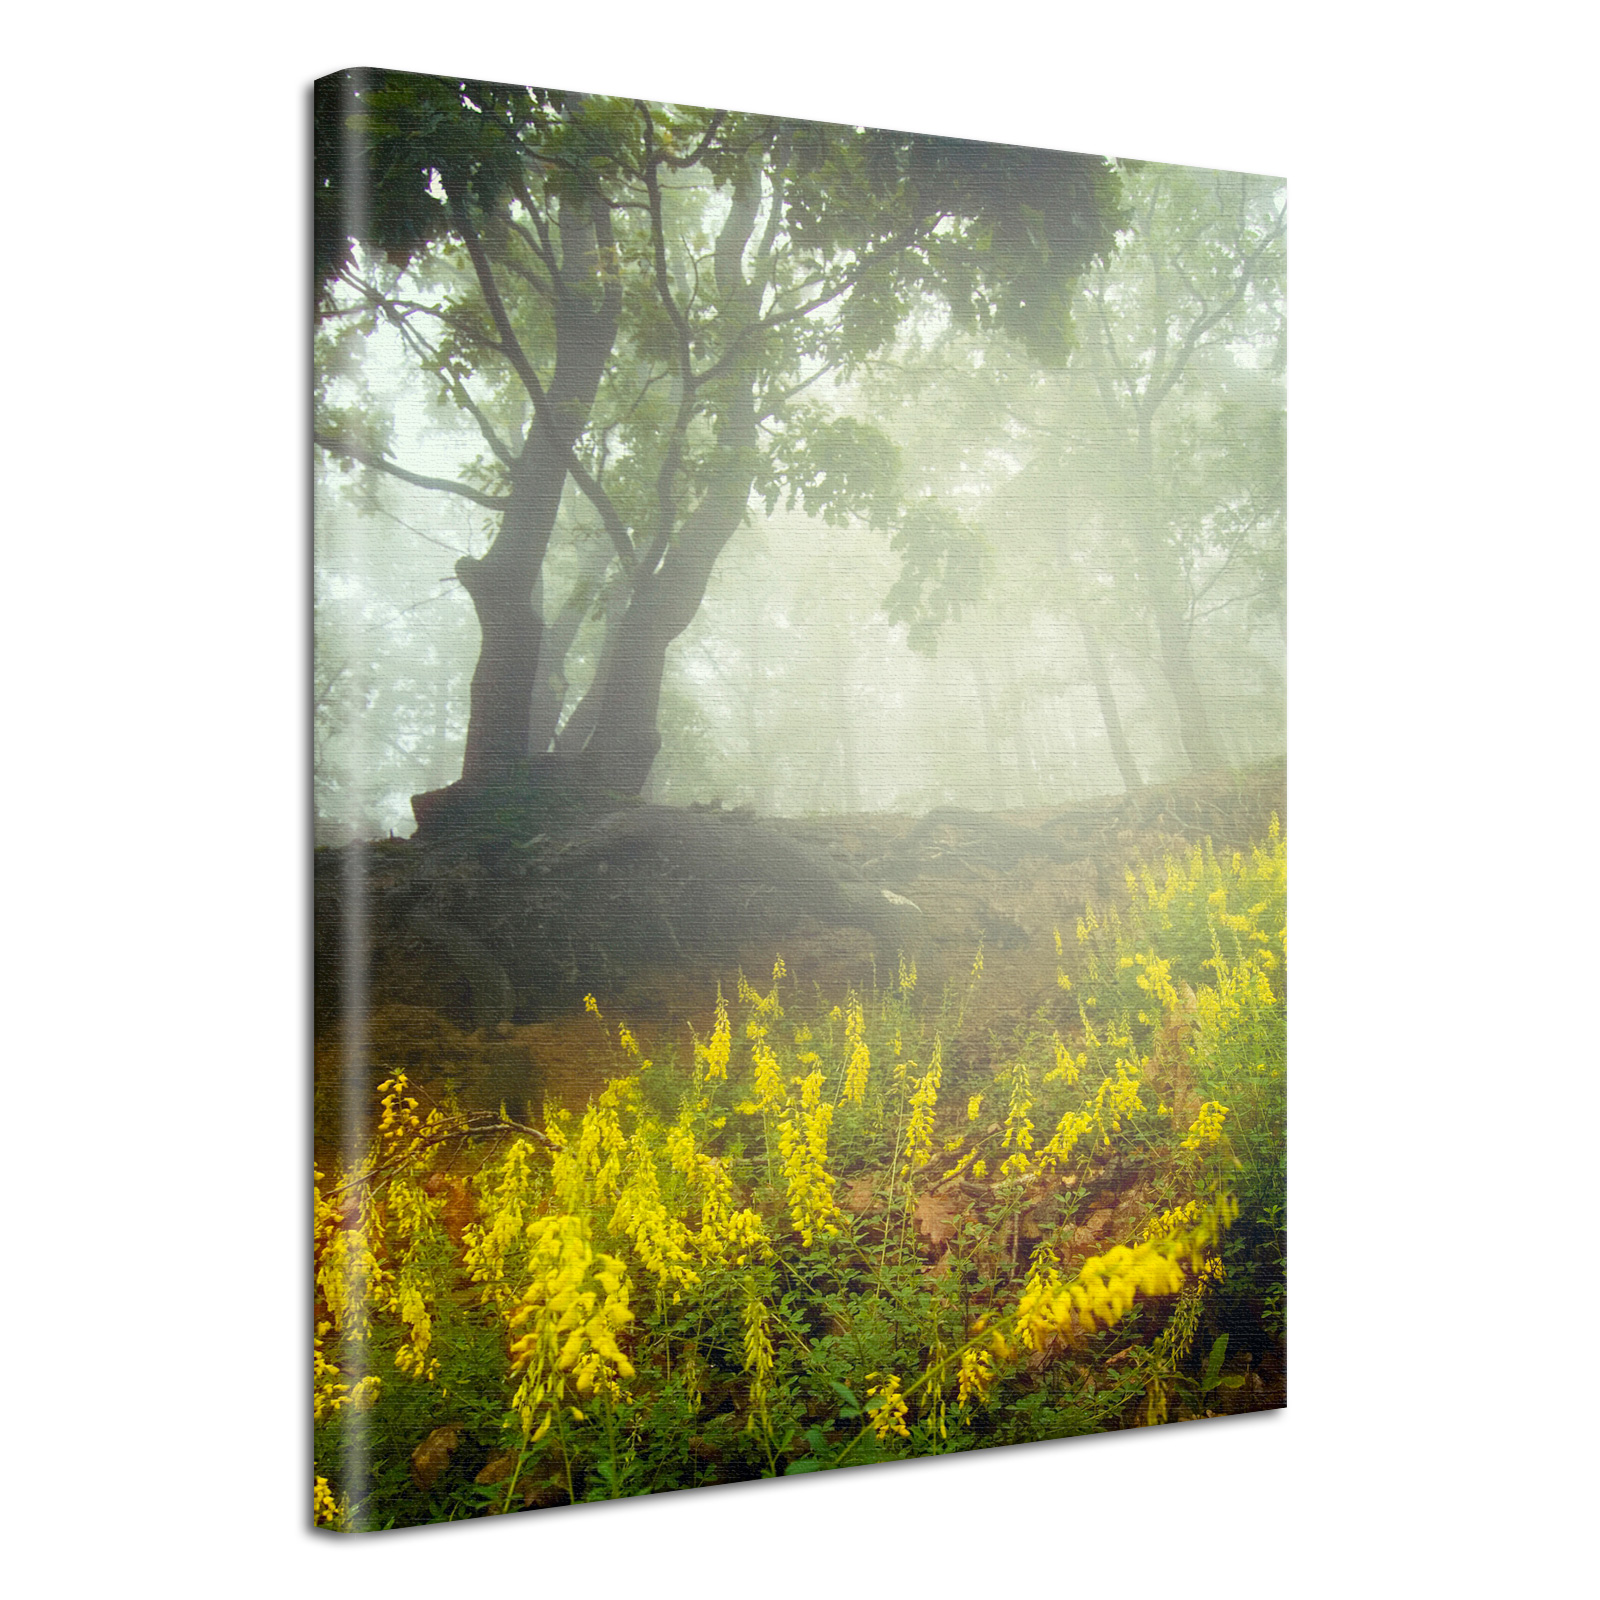 Leinwand Bild edel Blumen im Wald & Nebel